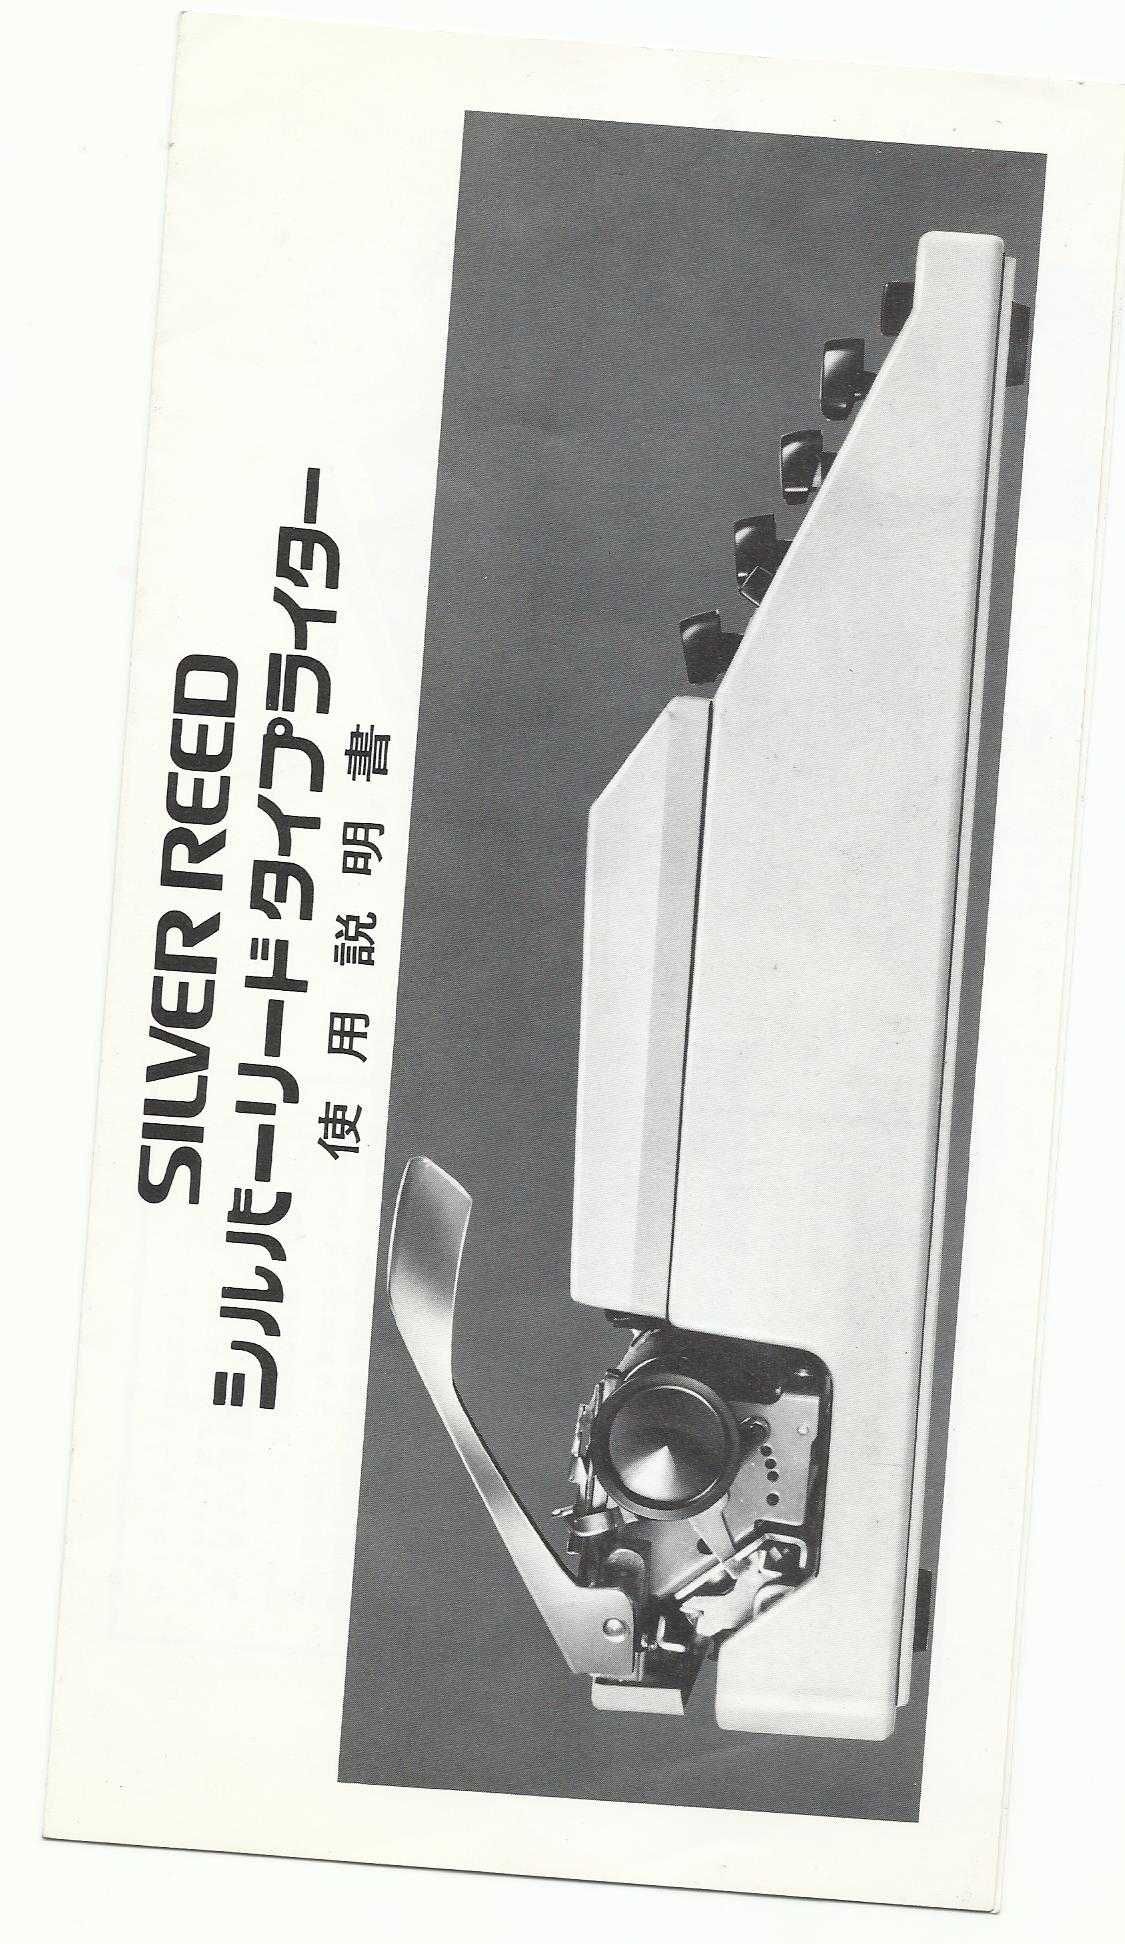 Masina de scris portabila SEIKO Silver Reed 715 (1980)